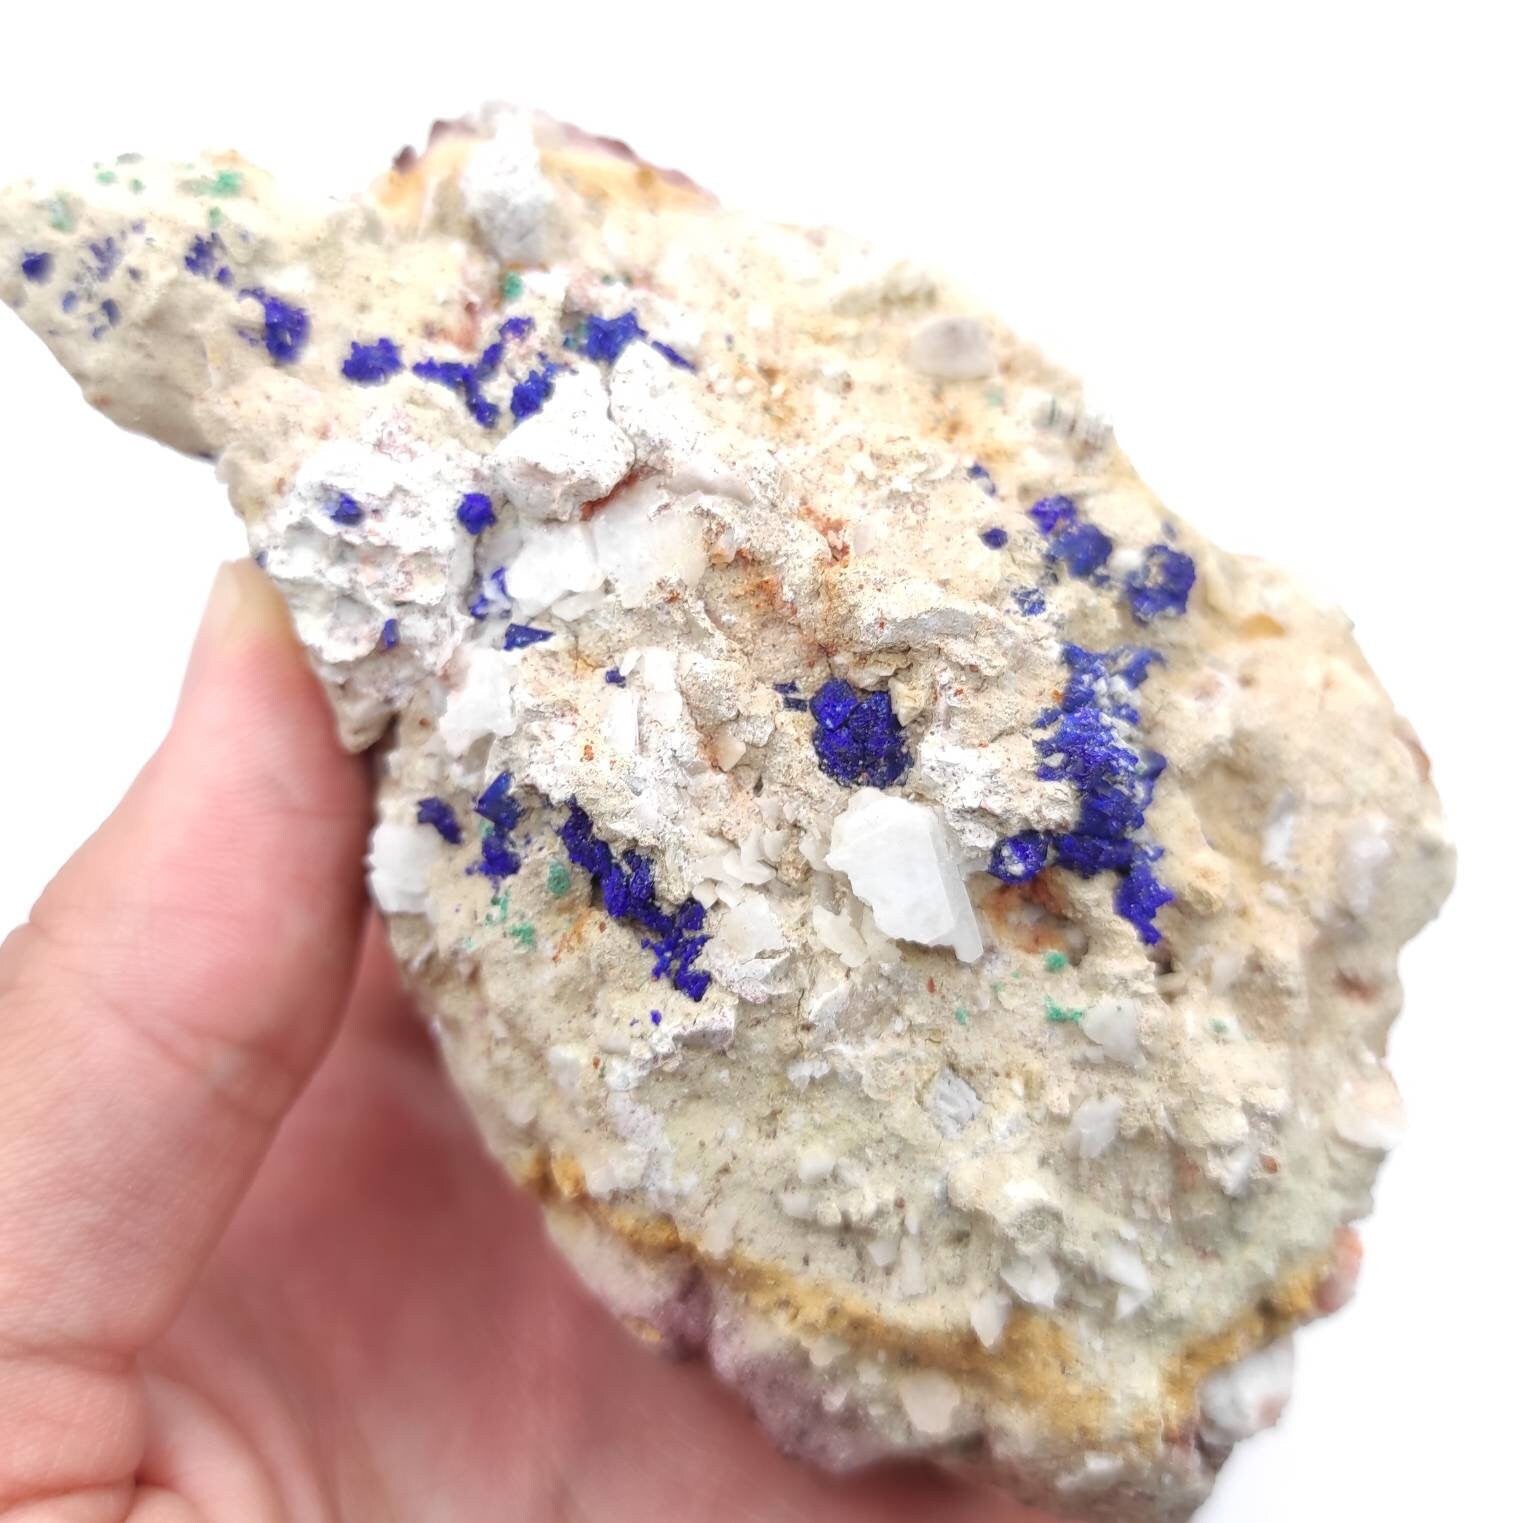 314g - Large Azurite in Matrix Crystal Specimen - Blue Azurite from Touissit, Morocco - Natural Raw Azurite Mineral - Rough Azurite